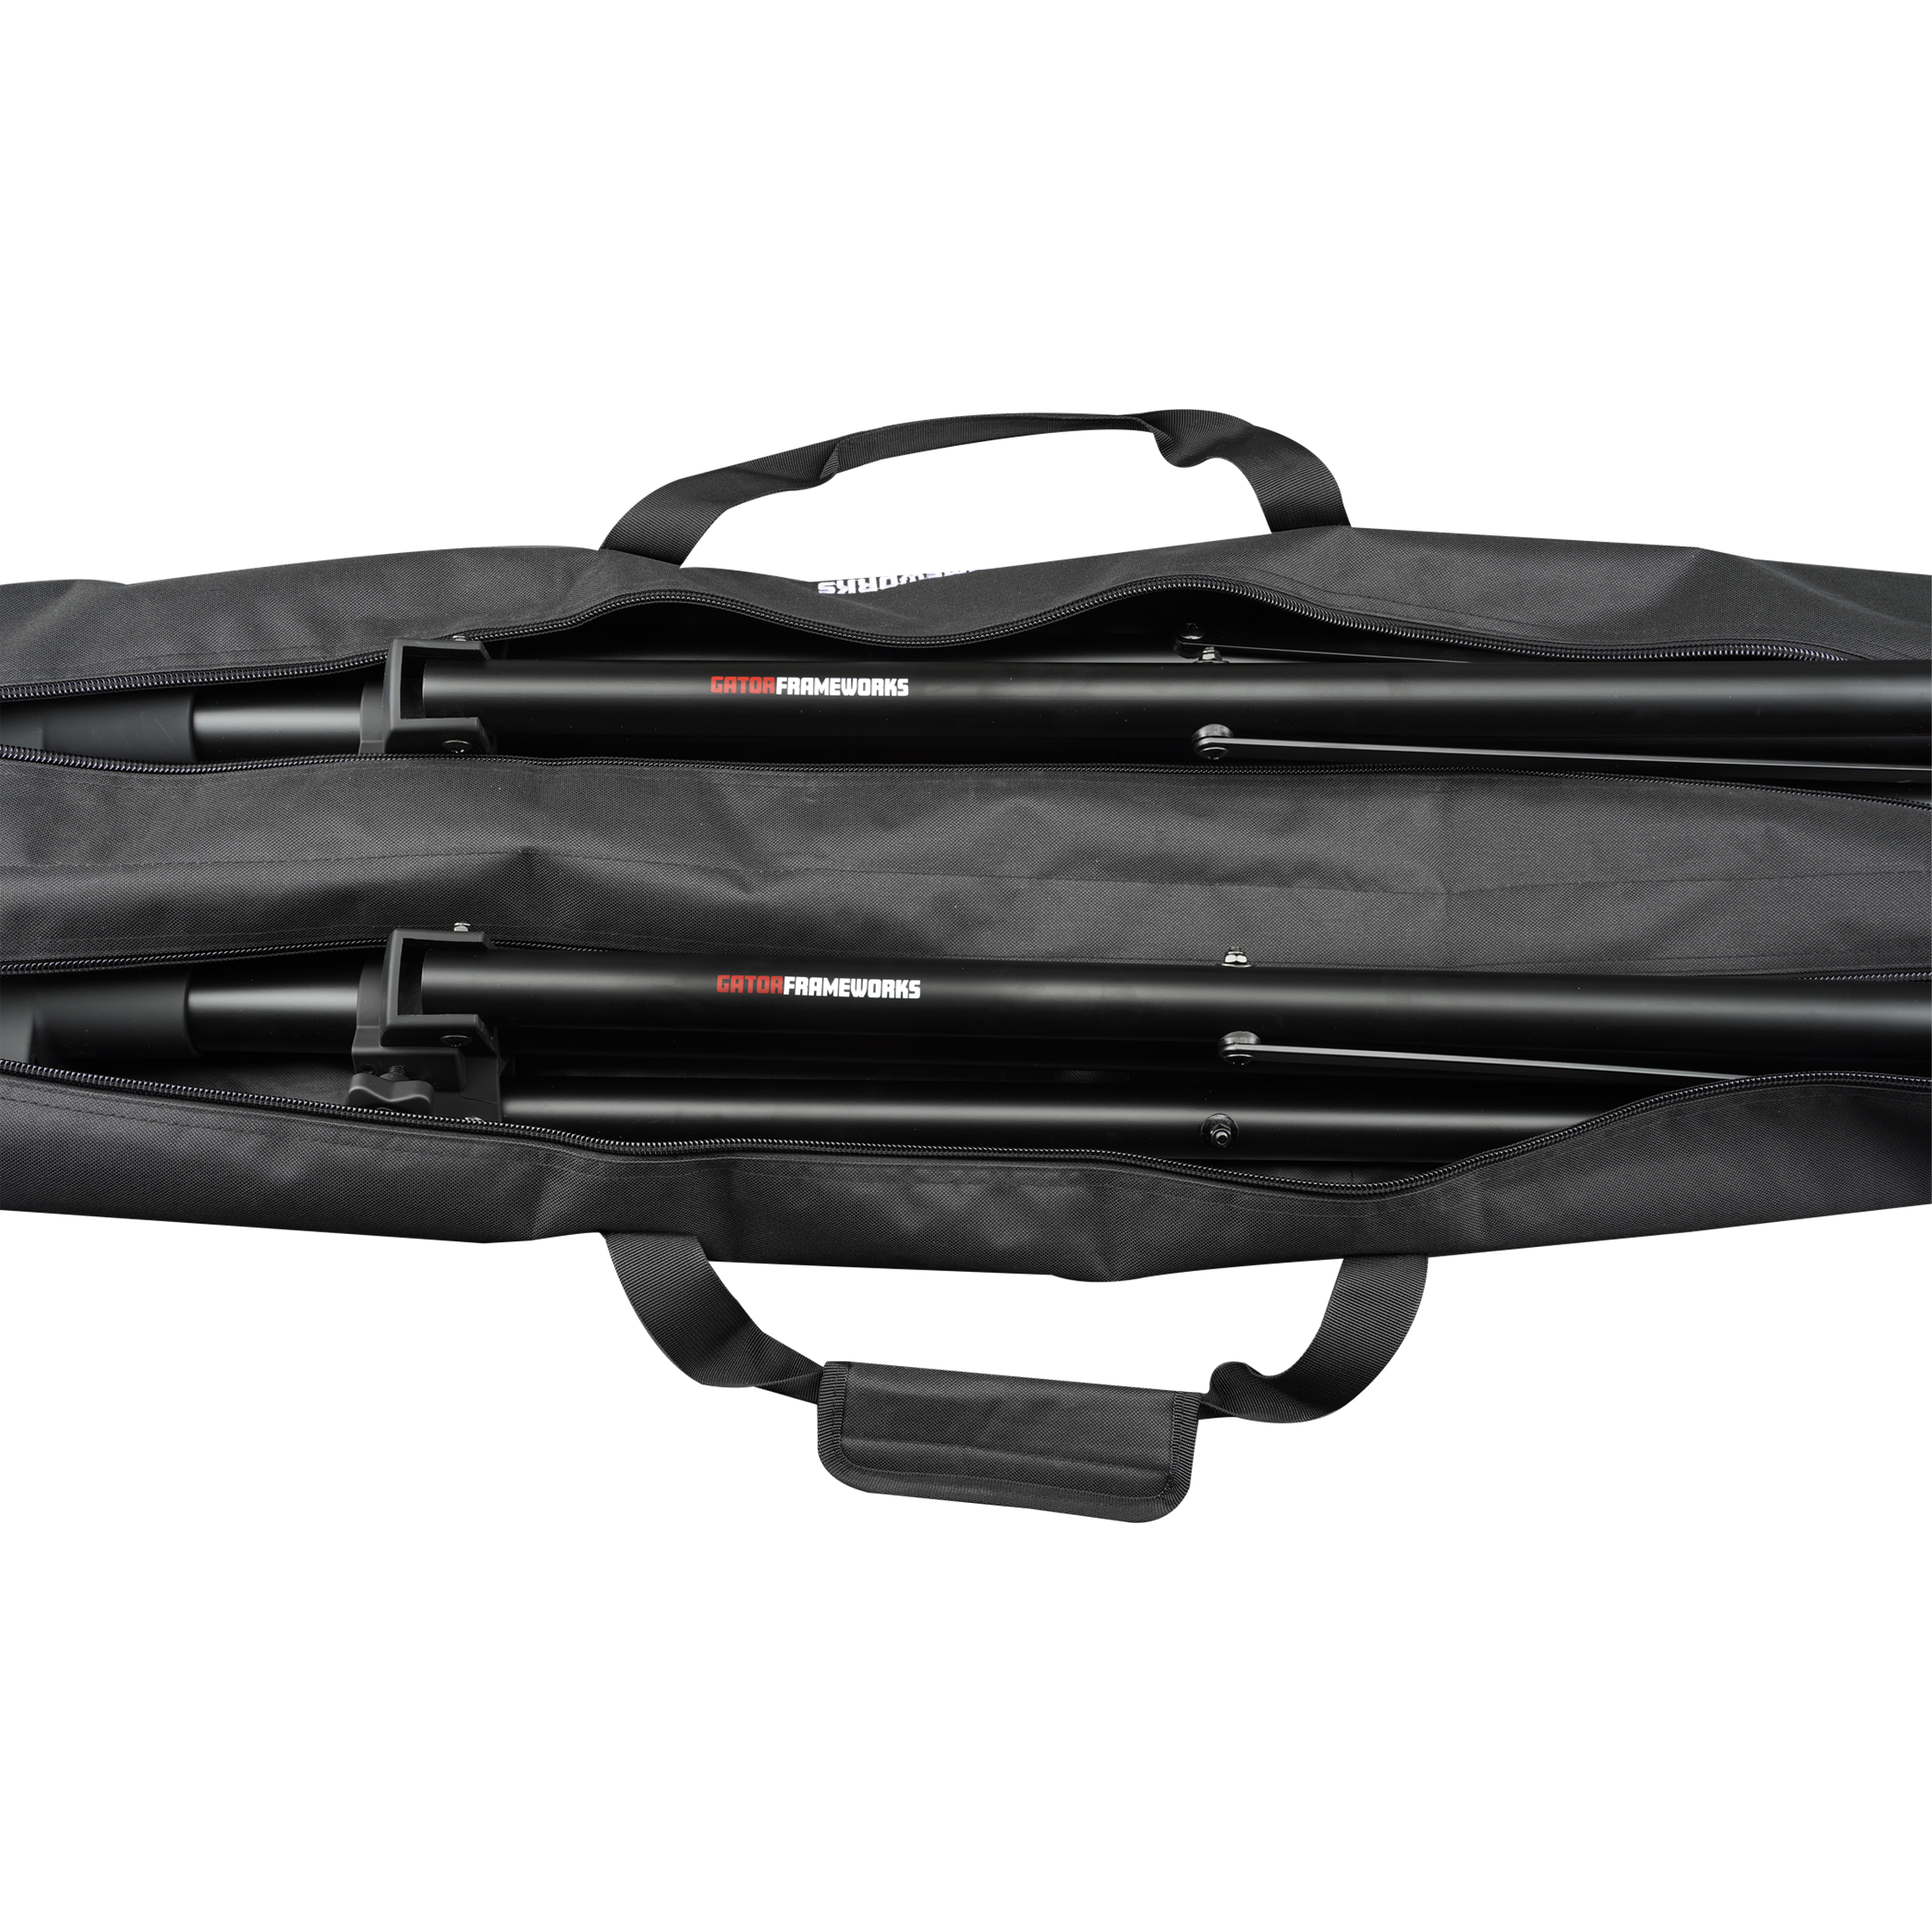 GFW-SPK-2000 (pair) with Carry Bag-GFW-SPK-2000SET